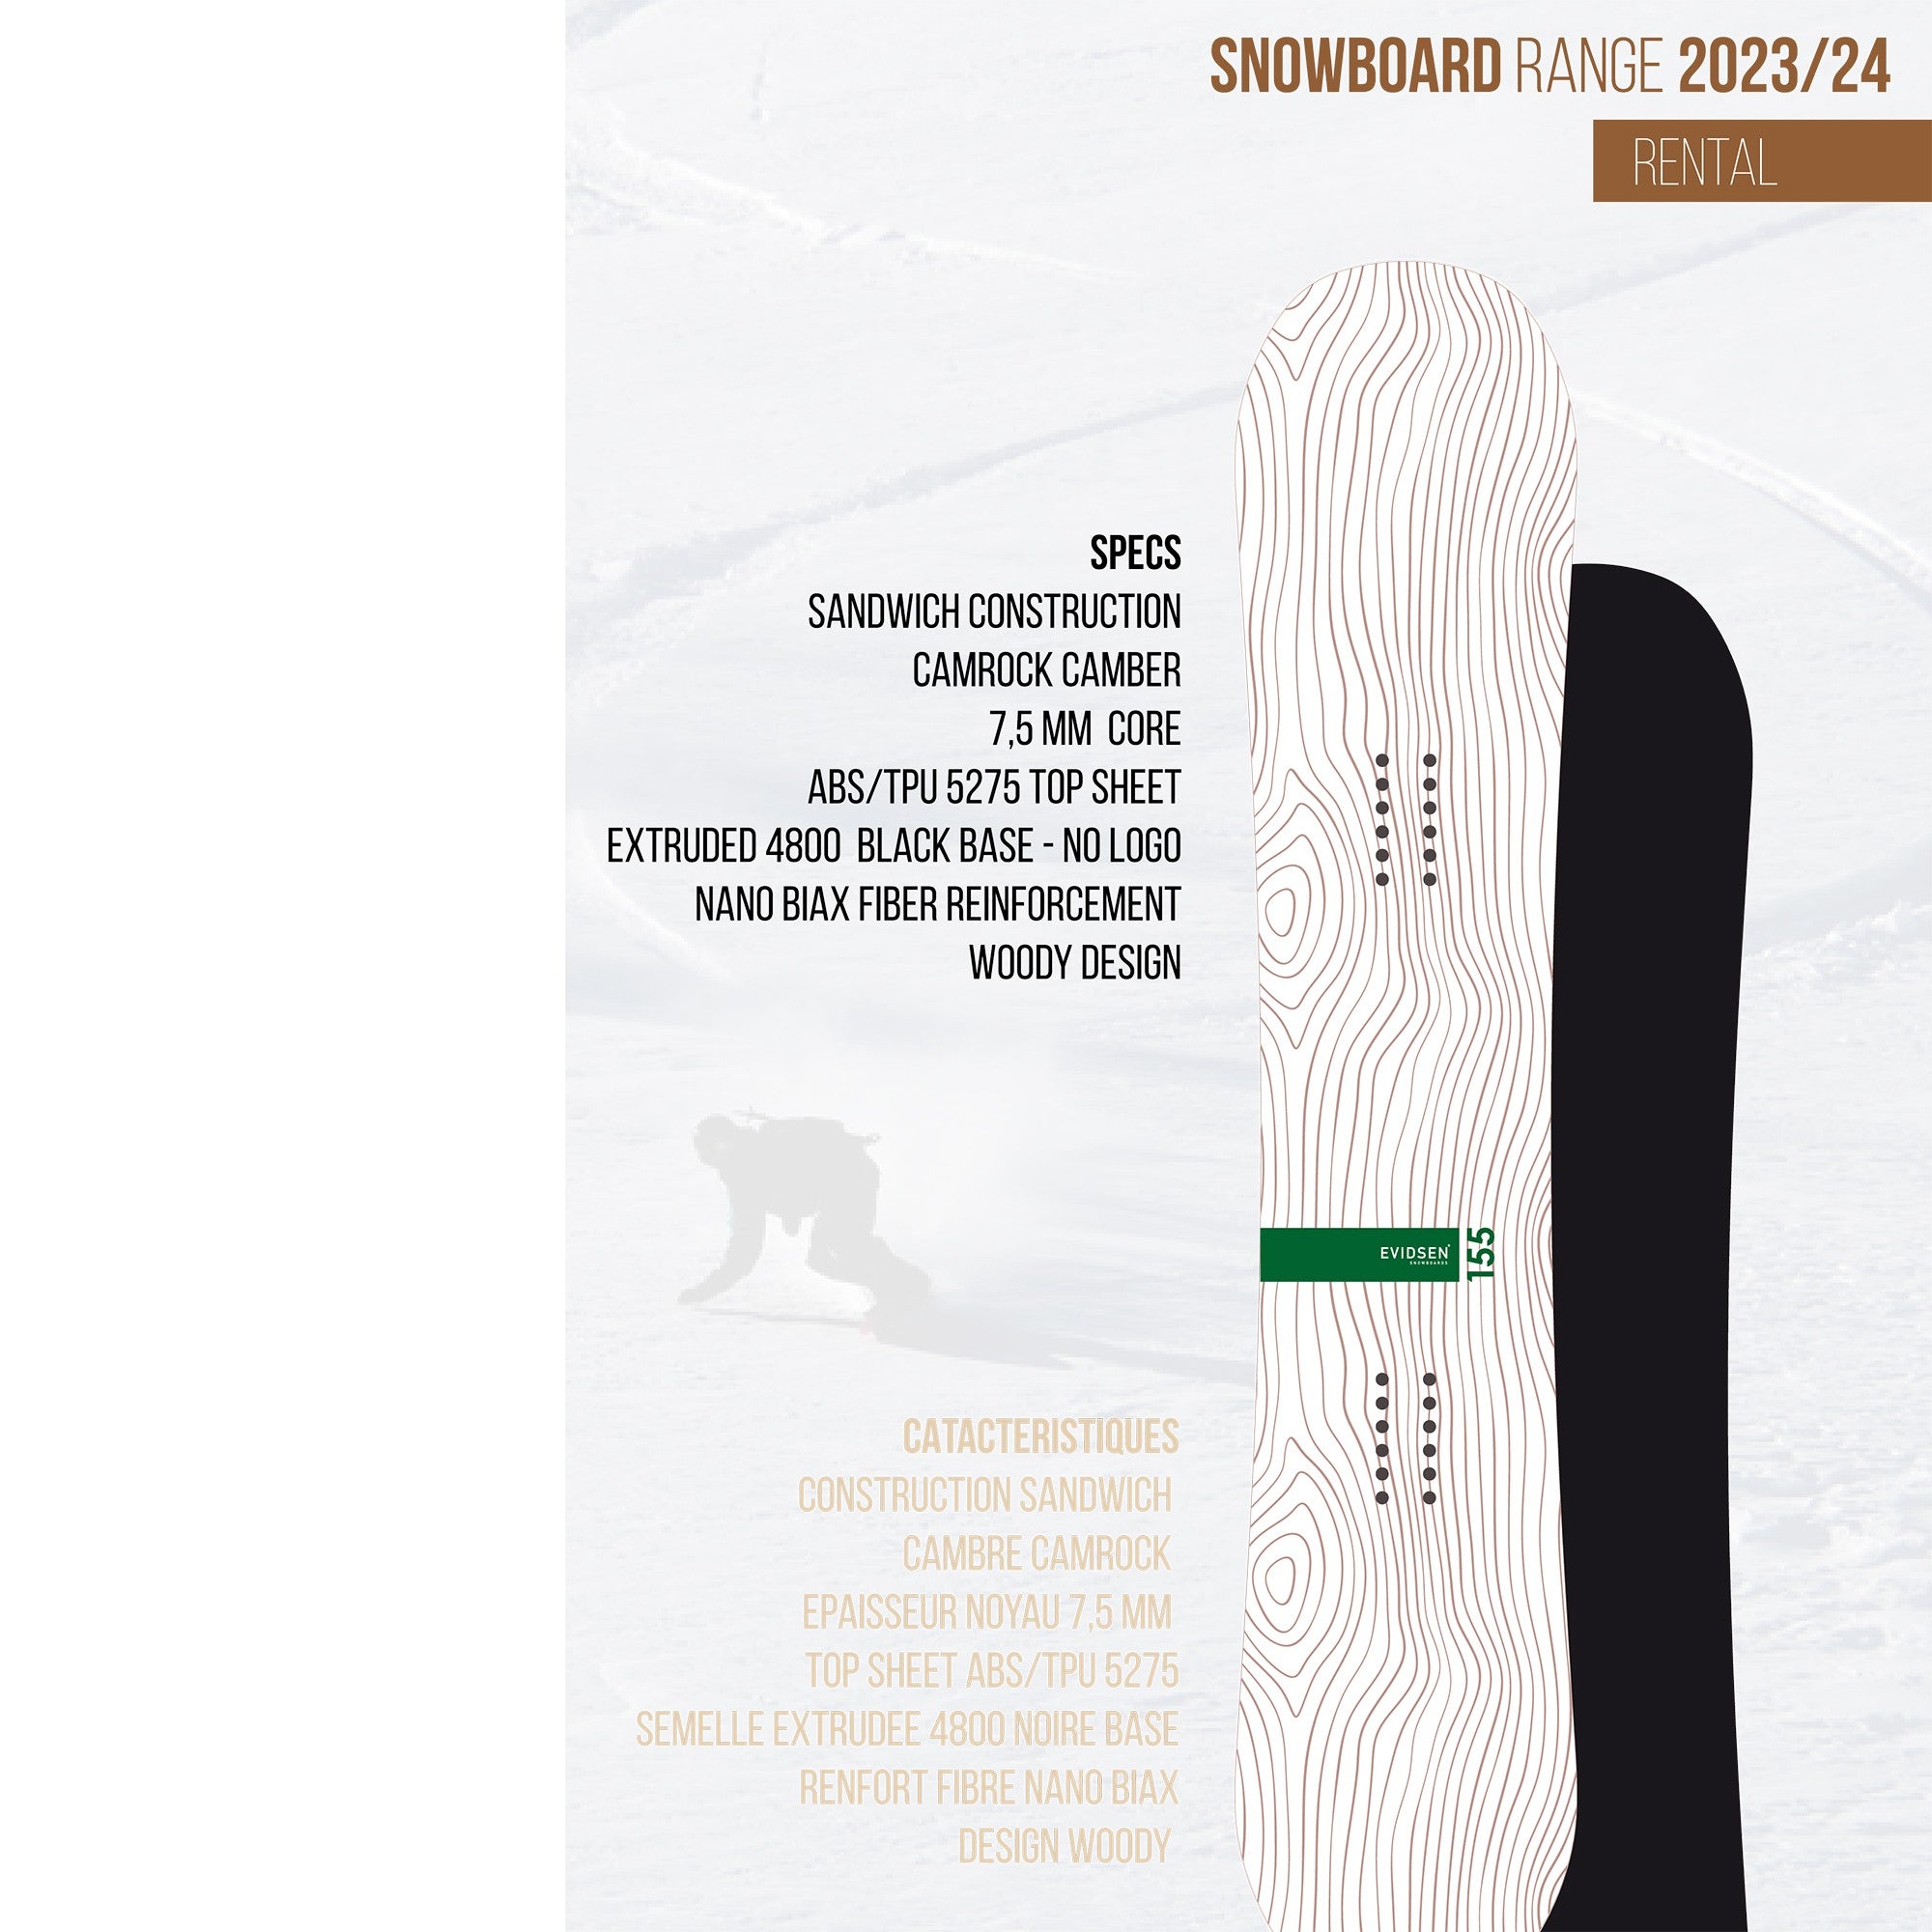 EVIDSEN SNOWBOARDS - Planche de Snowboard 157 WIDE